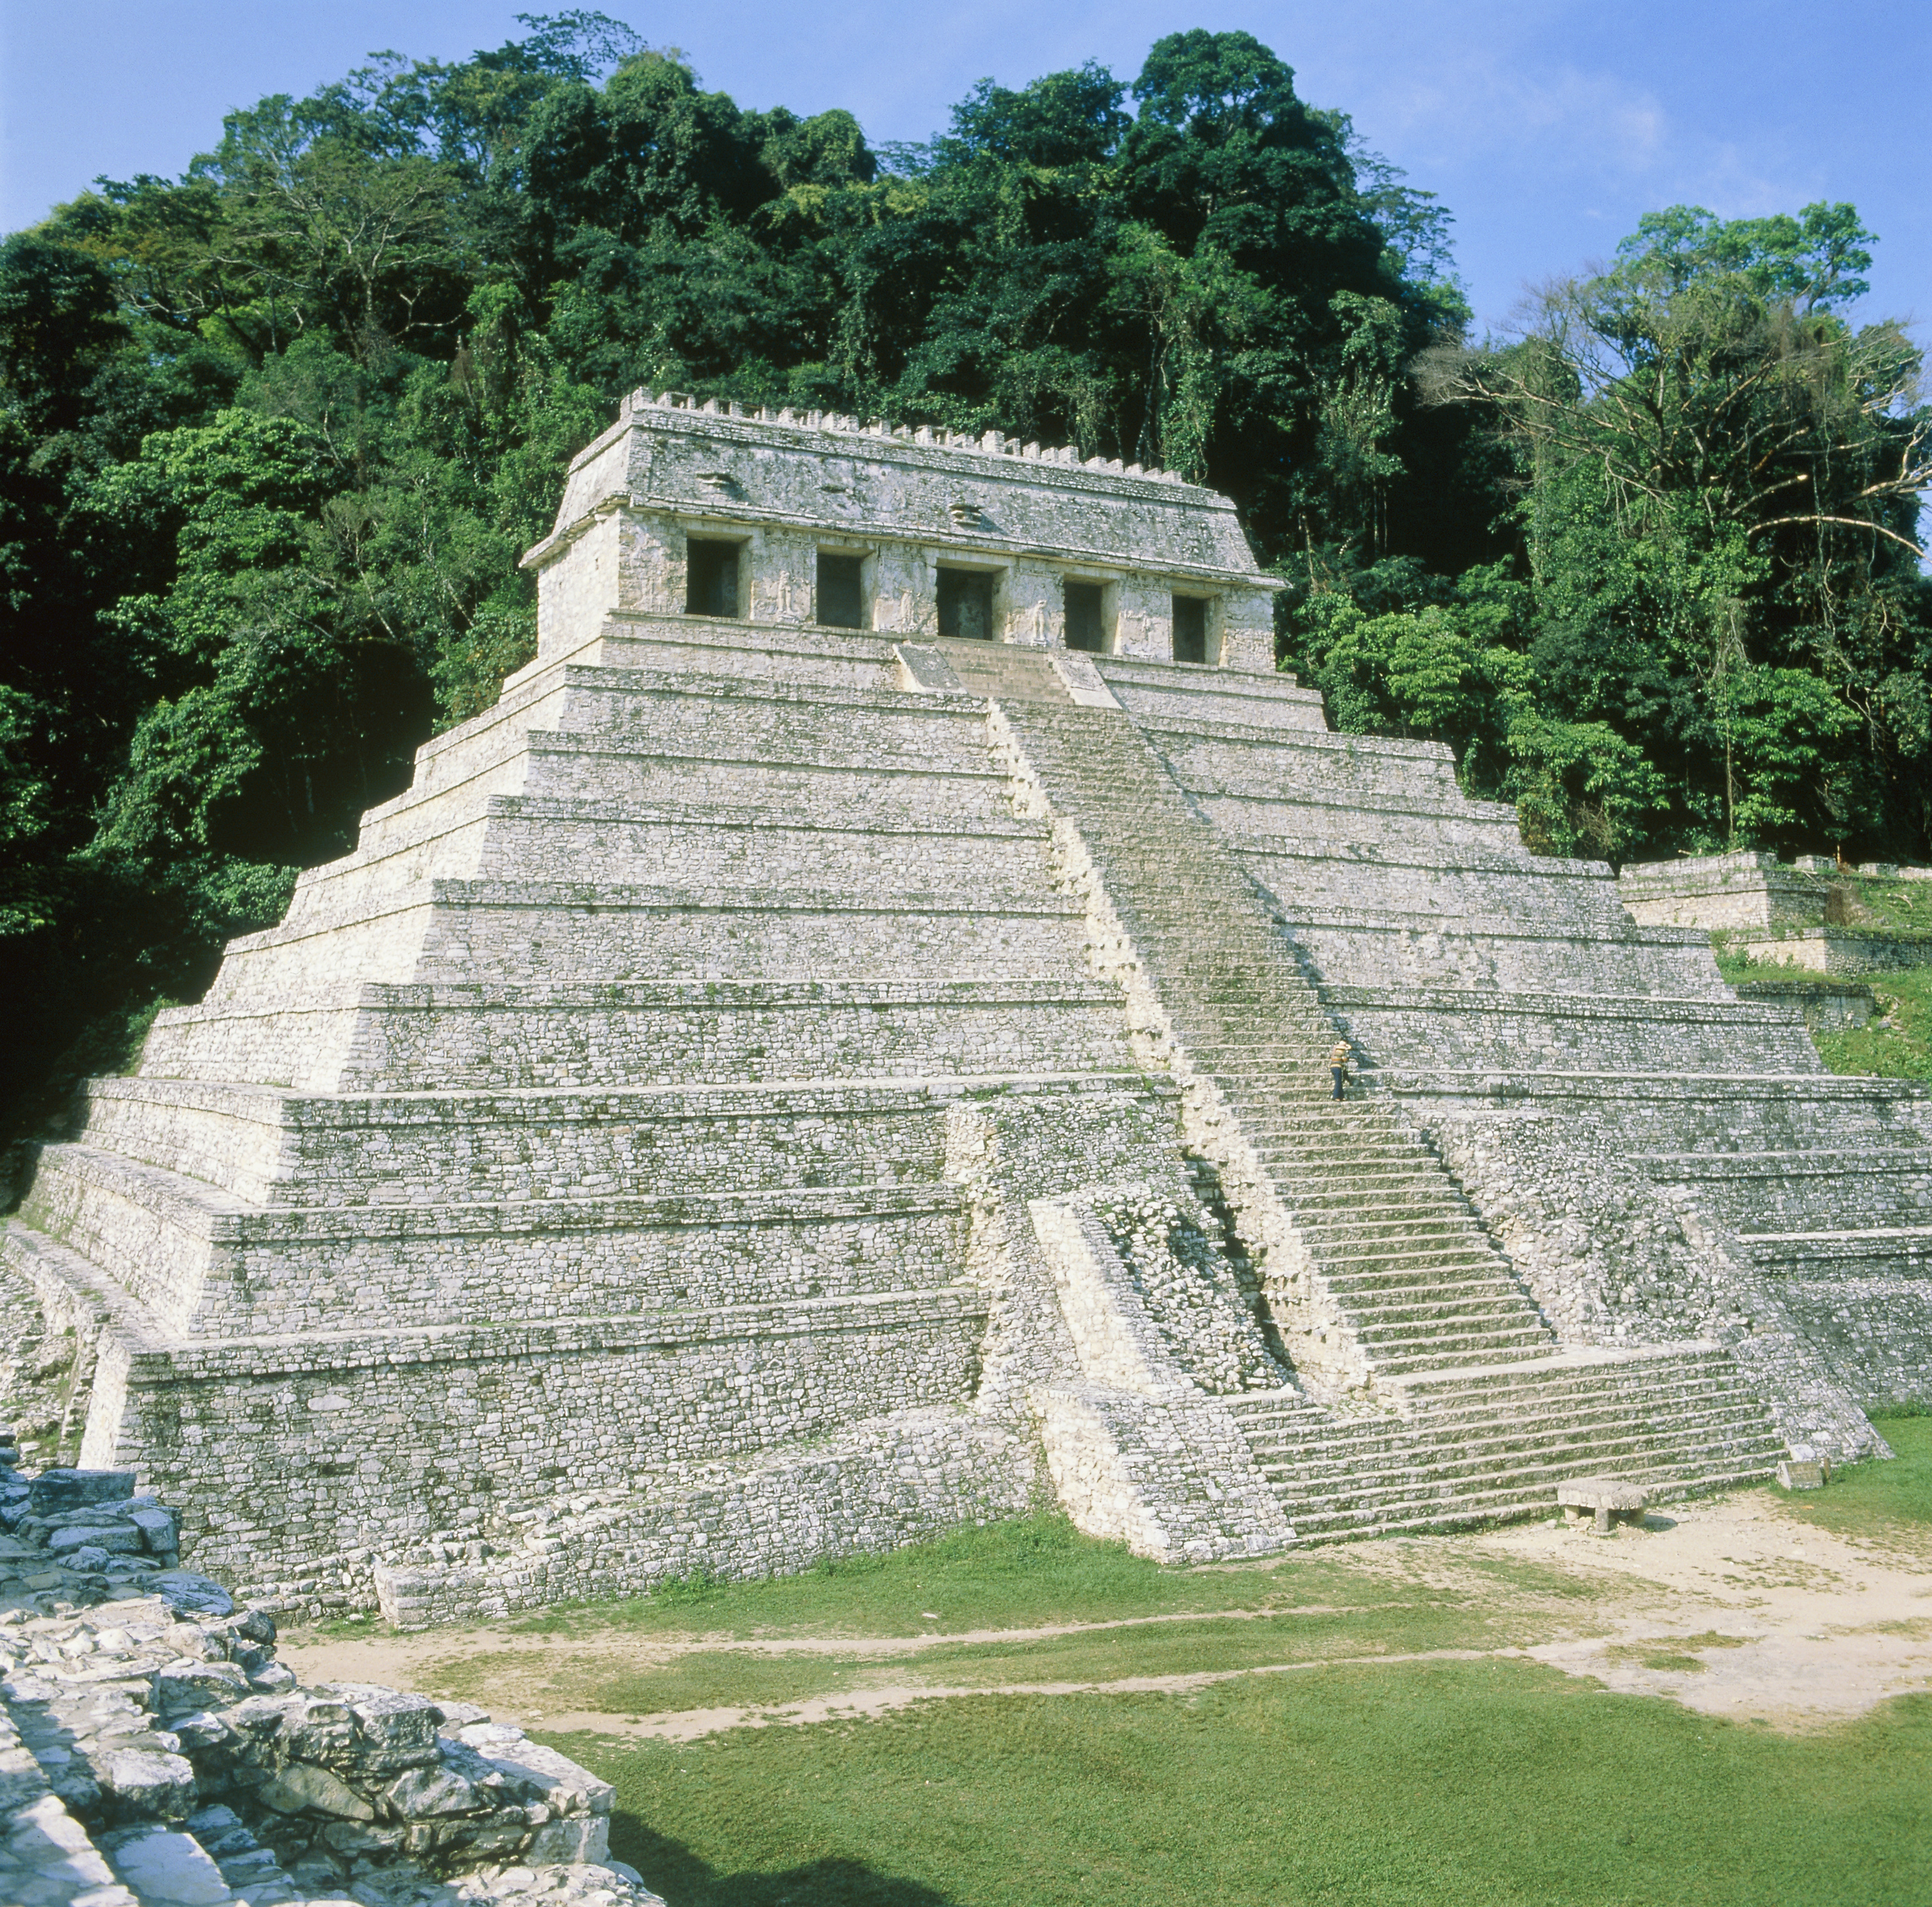 temple-of-inscriptions-in-palenque-mexico - Mesoamerican Pyramids ...